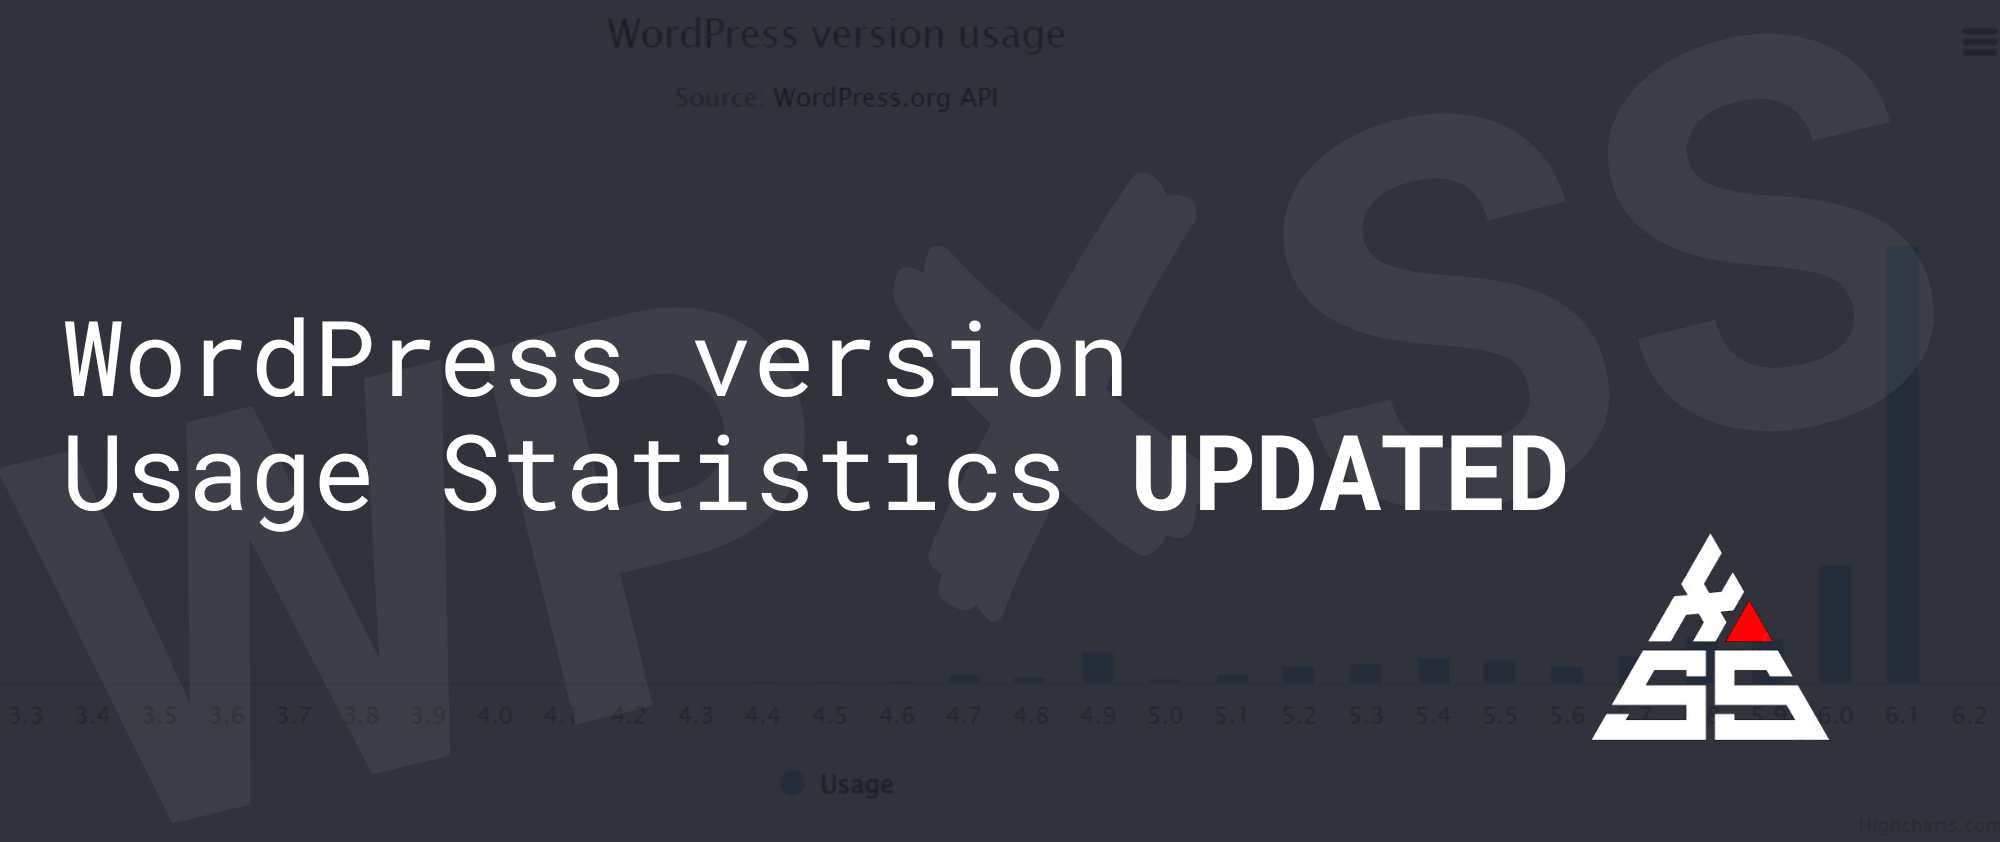 WordPress version usage statistics - WordPress version Usage Statistics UPDATED